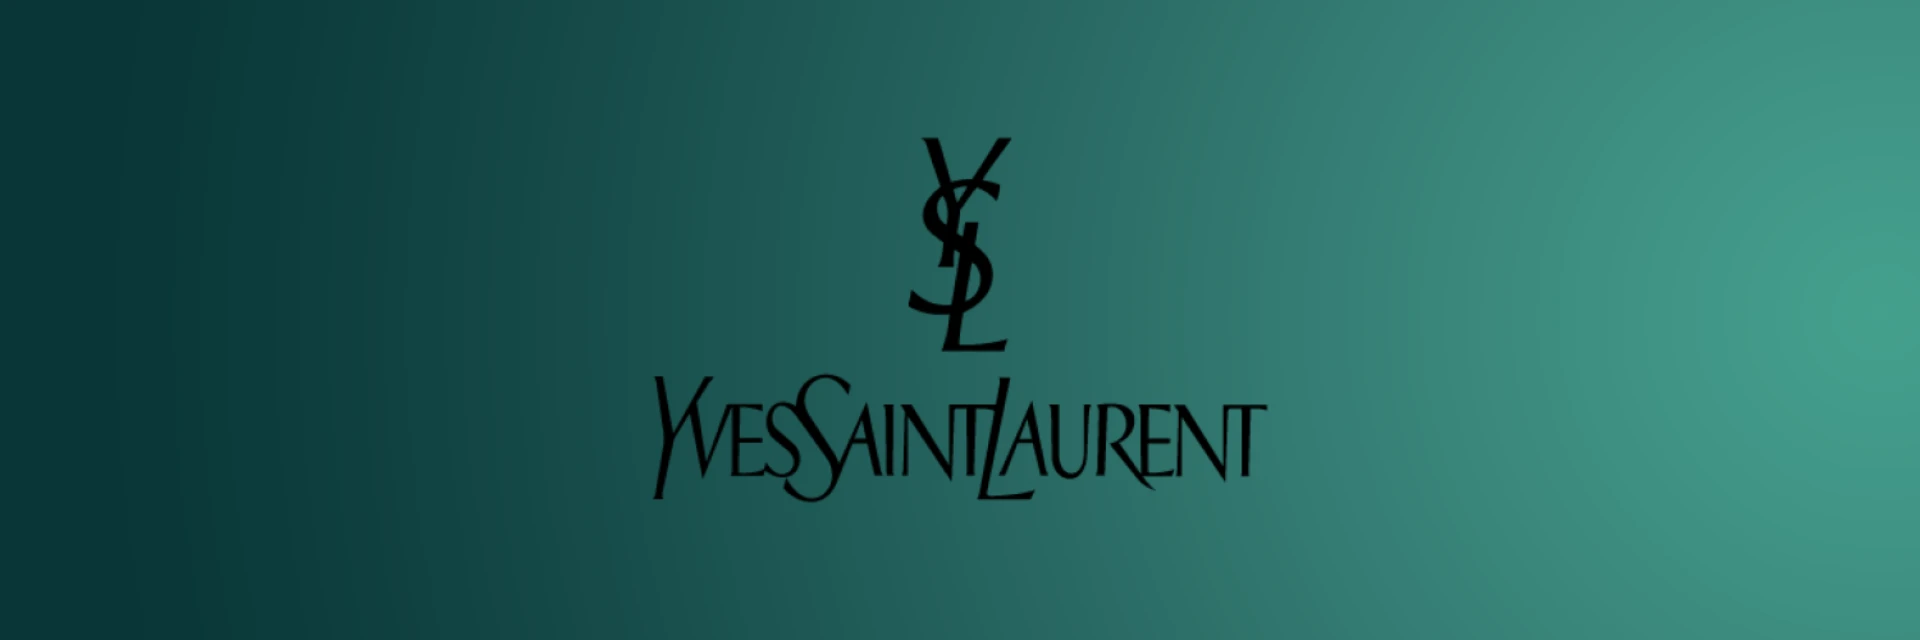 YvessaintLaurent perfume brand banner image